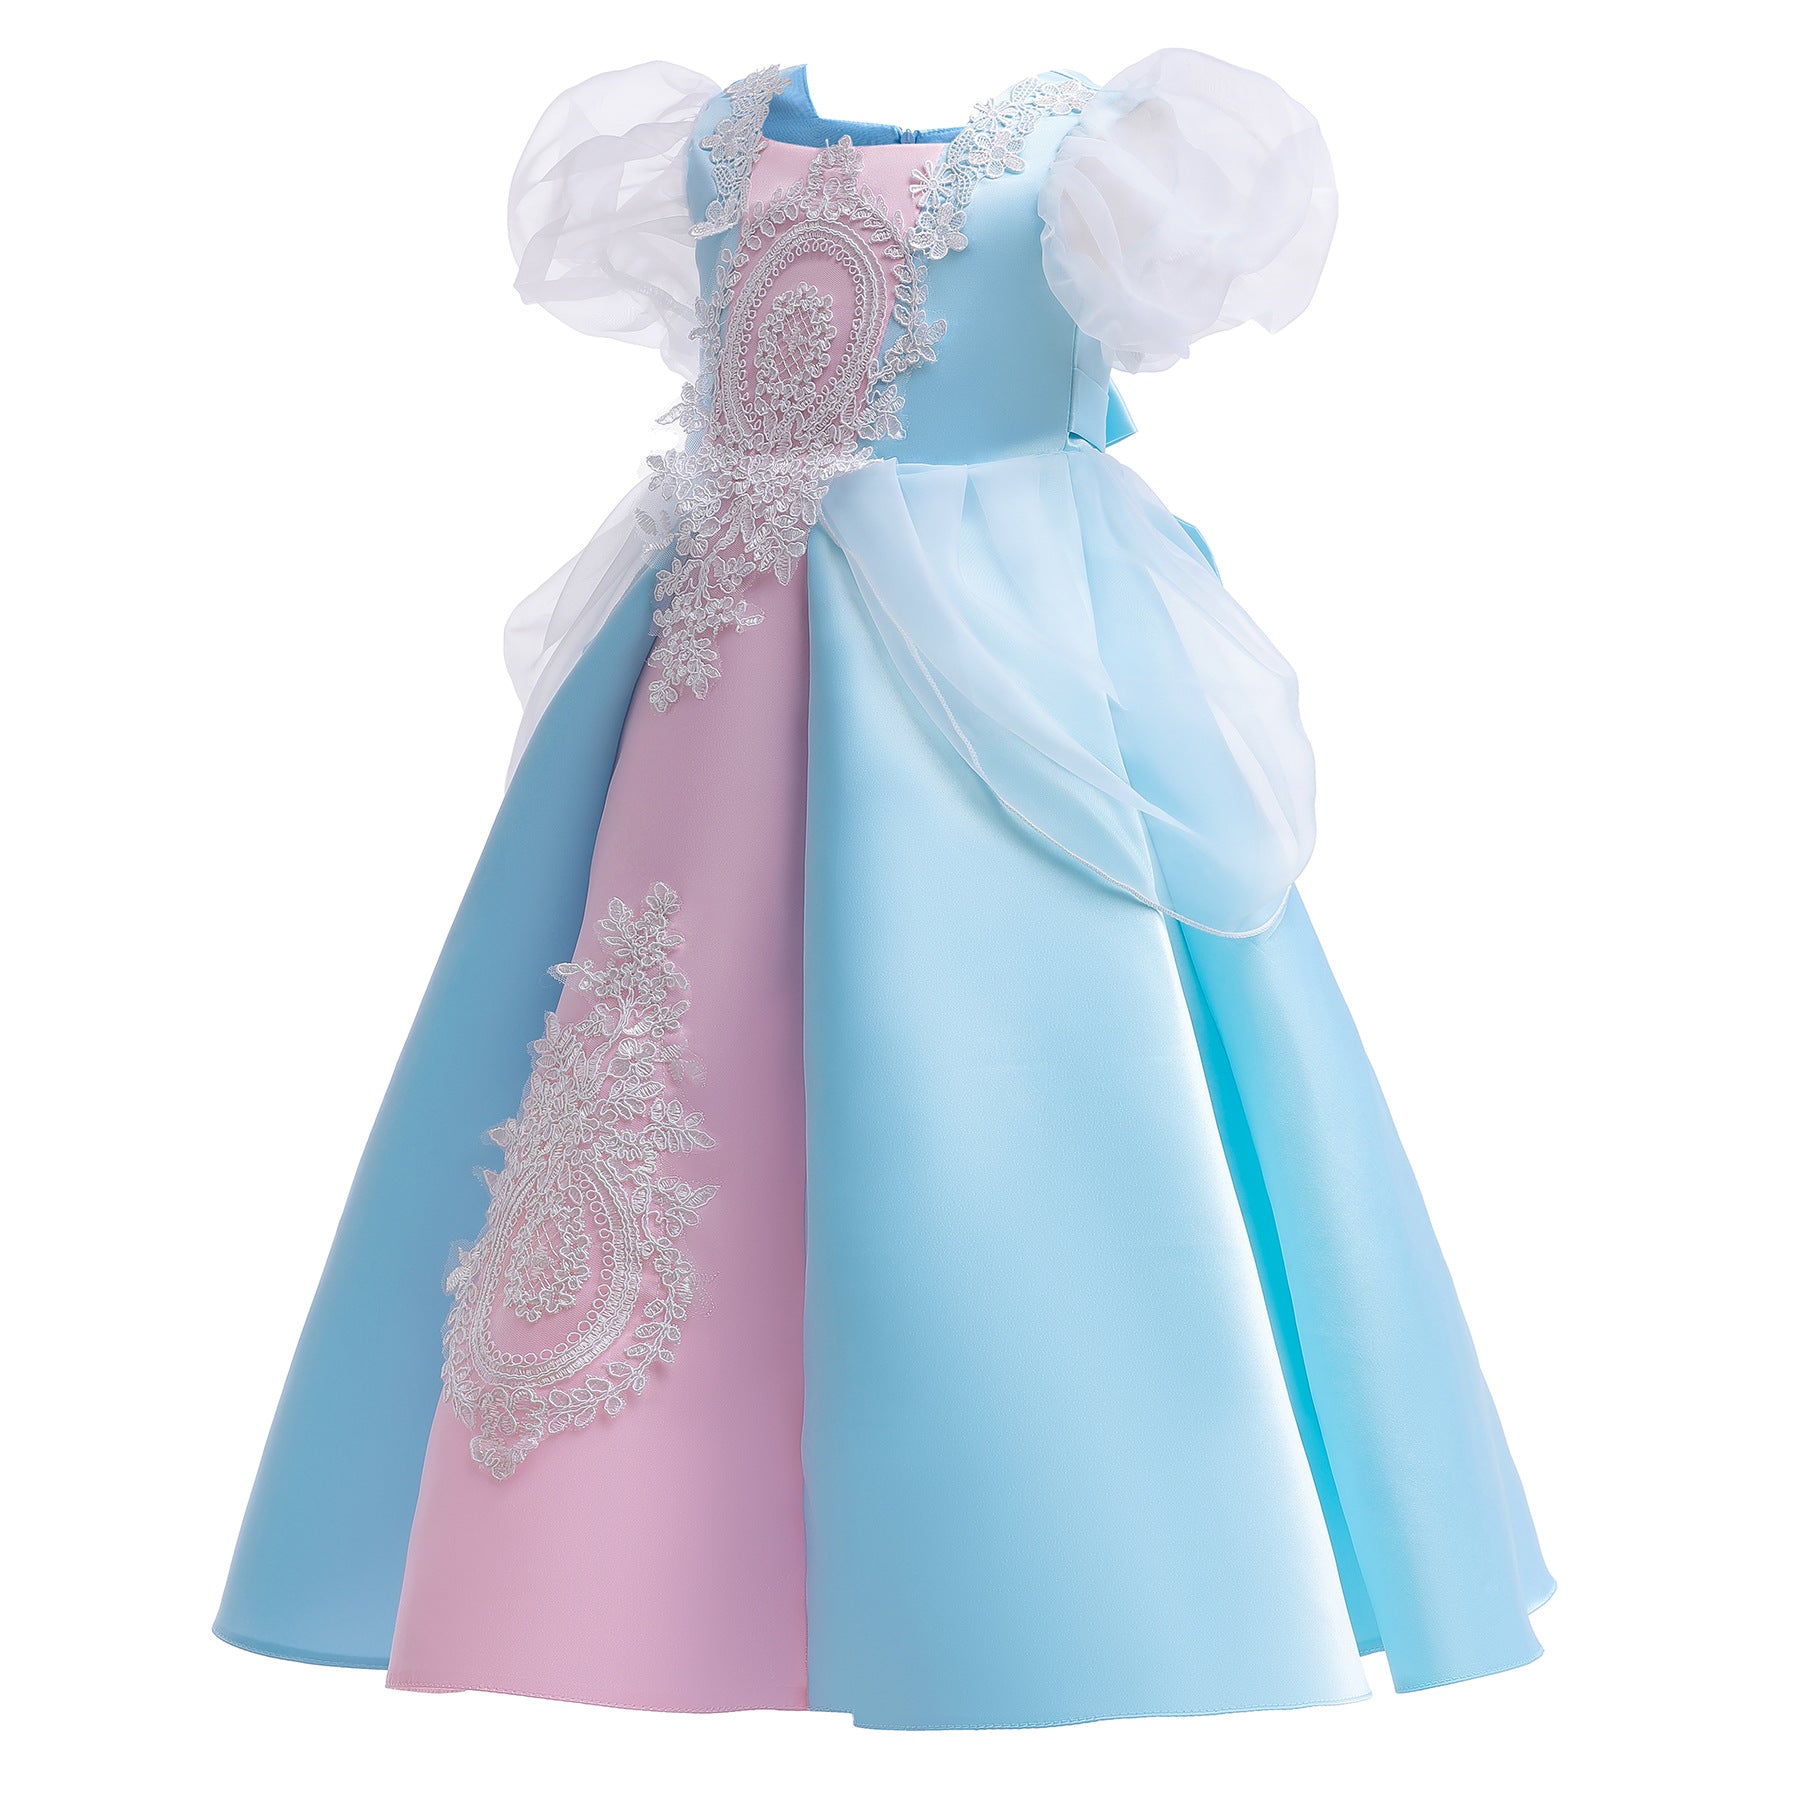 Frozen 2 Inspired toddler Kids Princess Wedding Lace Costume Elsa Dress for Girls